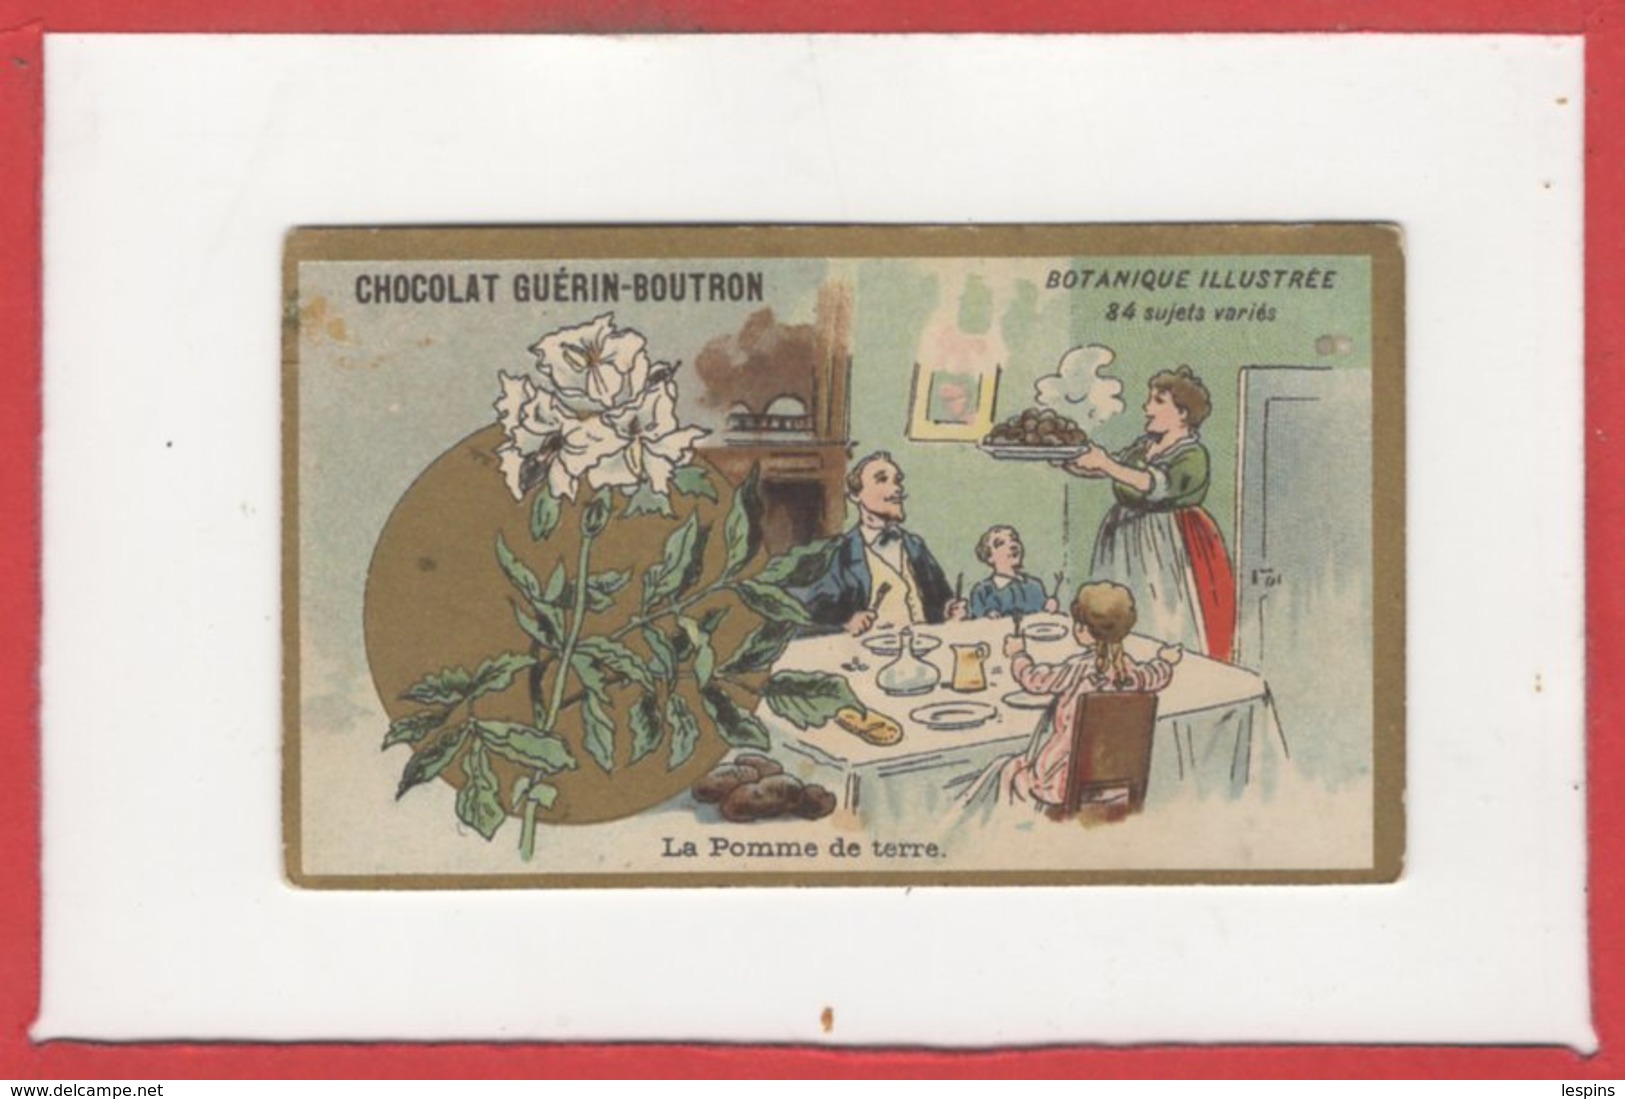 CHROMOS - Chocolat GuérIn Boutron - Botanique Illustrée - La Pomme De Terre - Guérin-Boutron